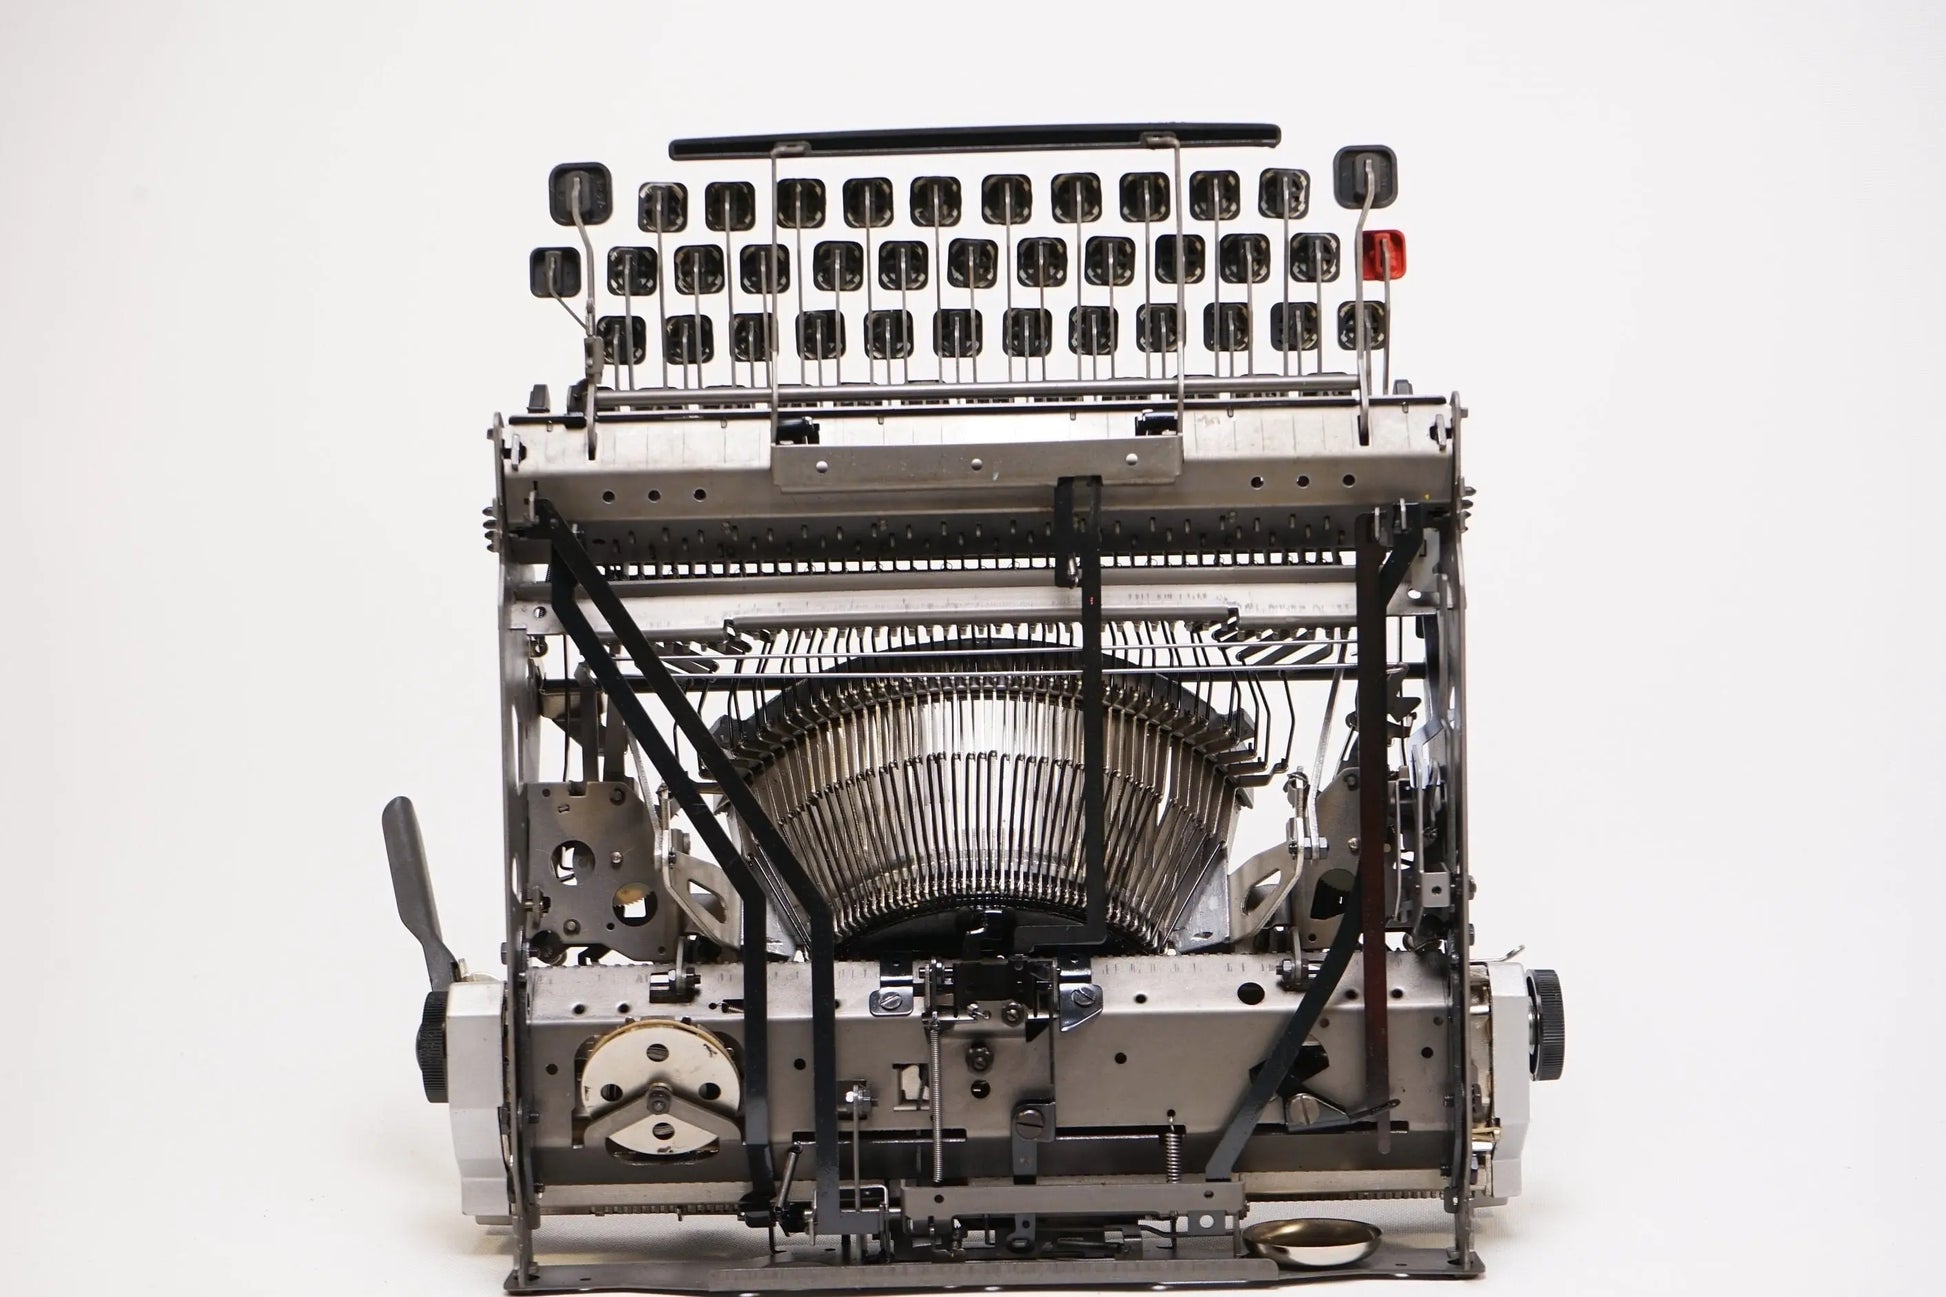 Olivetti Lettera 32 Original Green Vintage Manual Typewriter Serviced - ElGranero Typewriter.Company